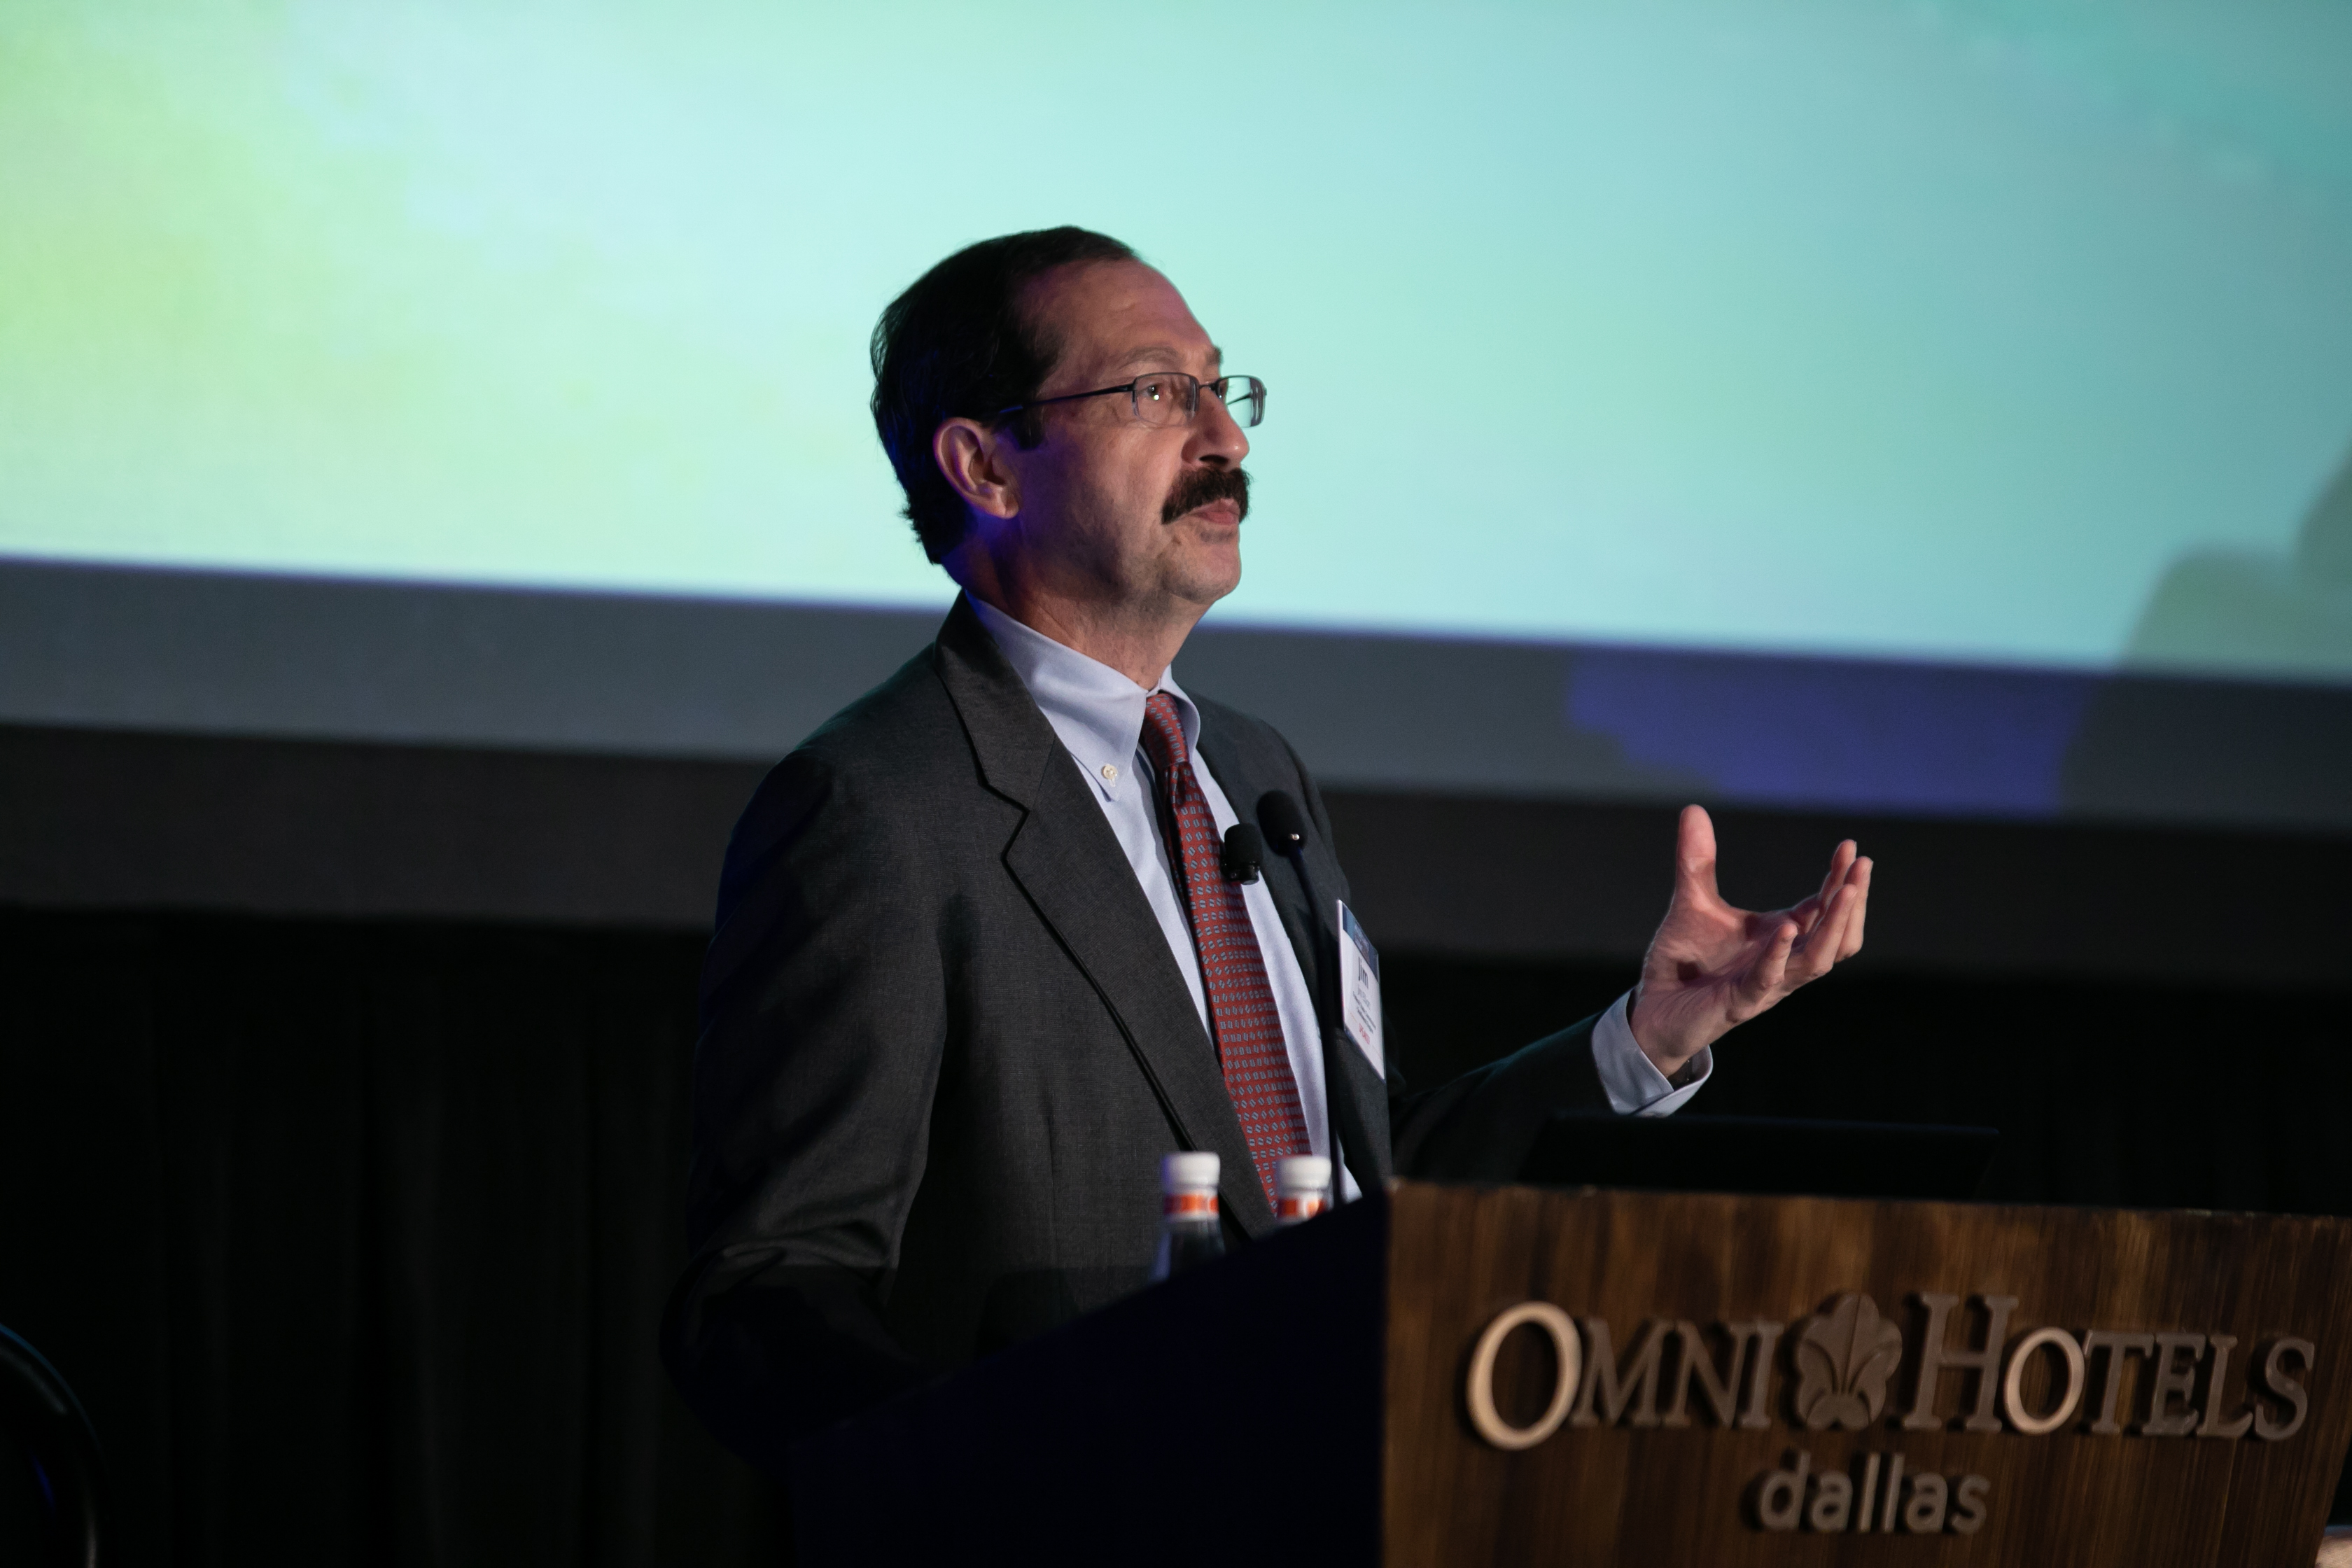 Jim Elliott, the FTC’s assistant regional director for the Southwest region